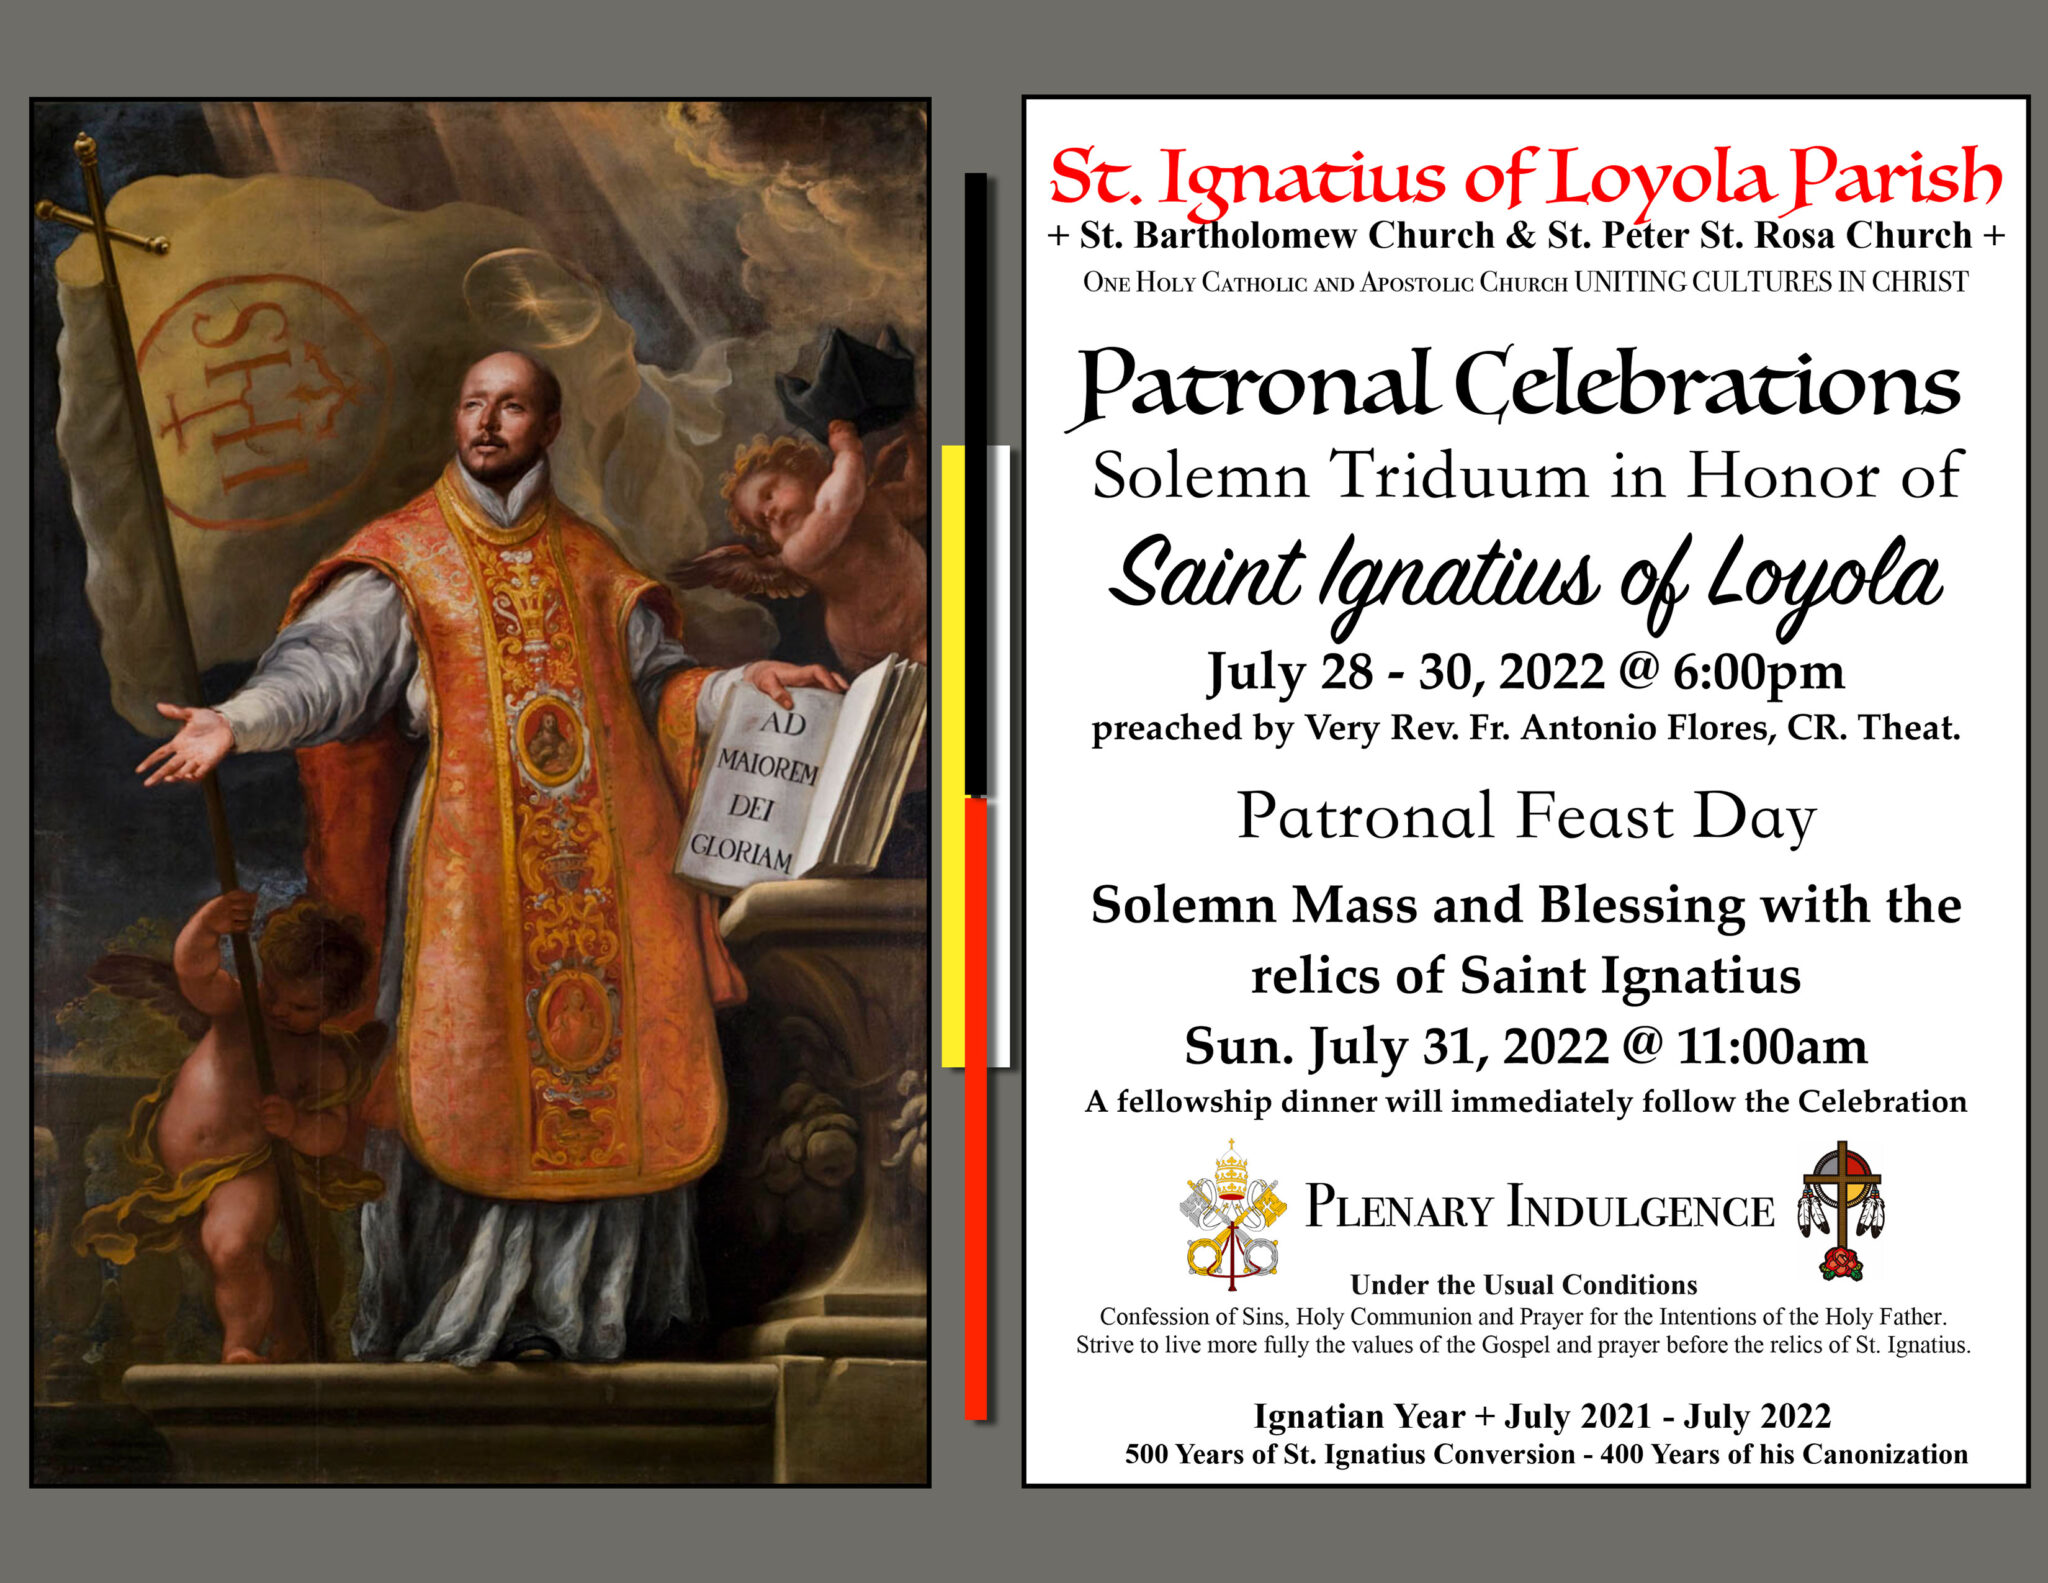 The Southern Ute Drum | St. Ignatius Patronal Celebrations